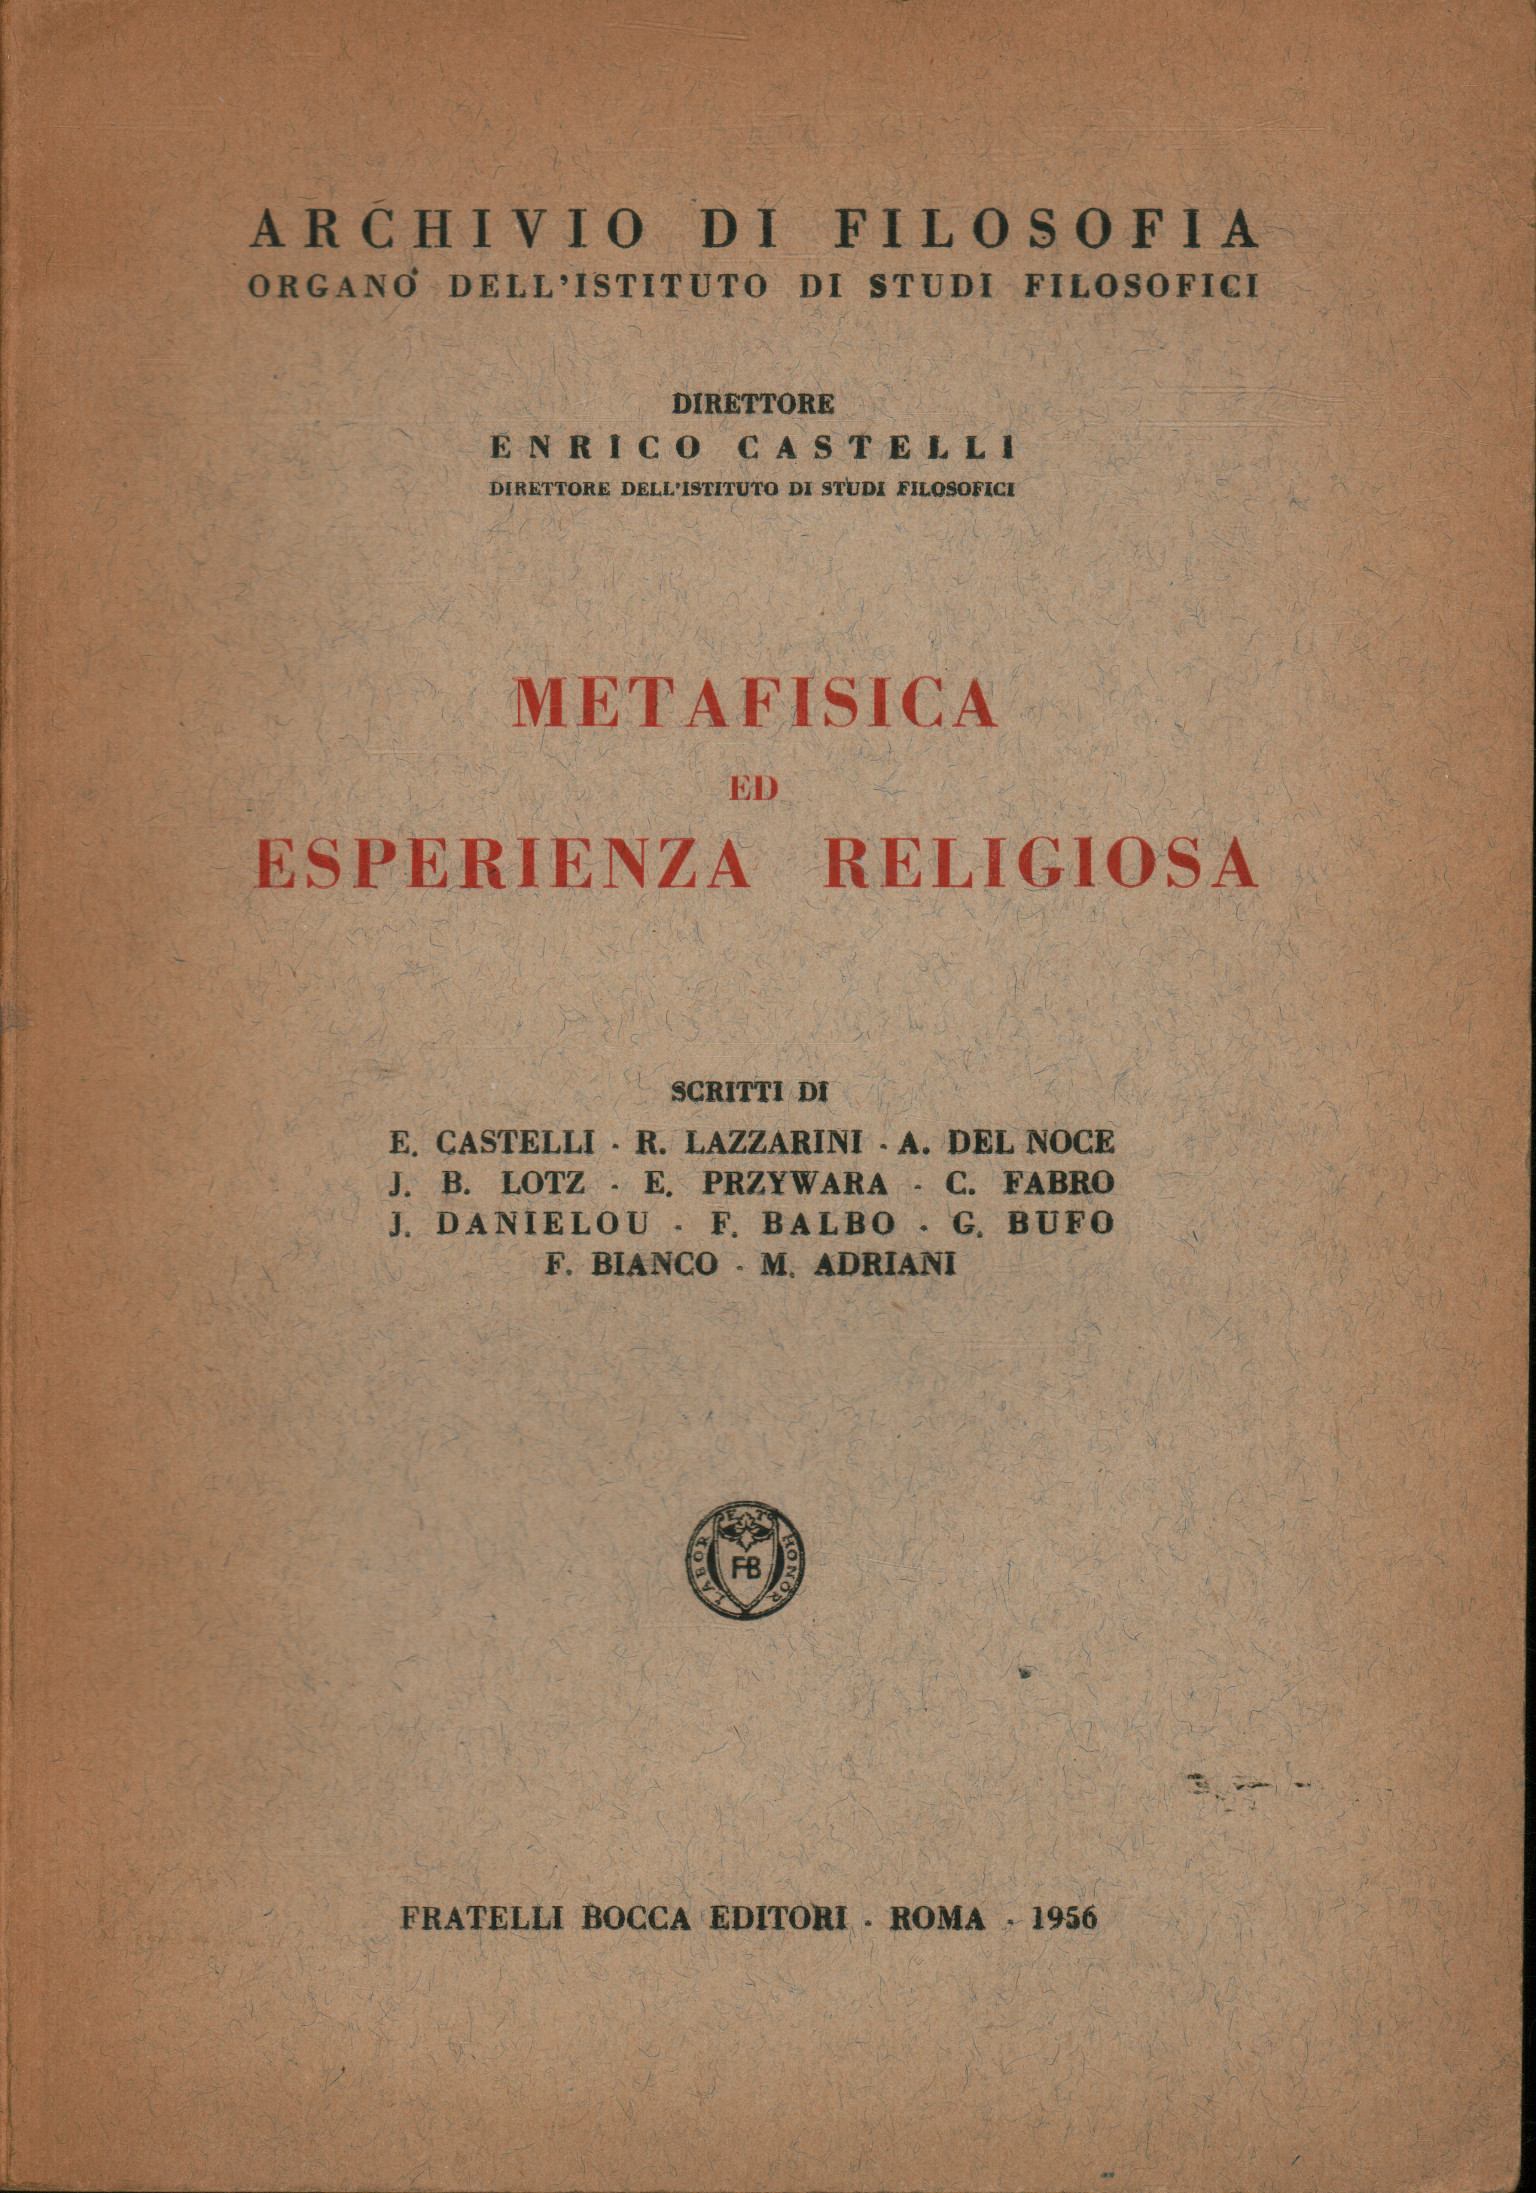 Metaphysik und religiöse erfahrung, AA. VV.